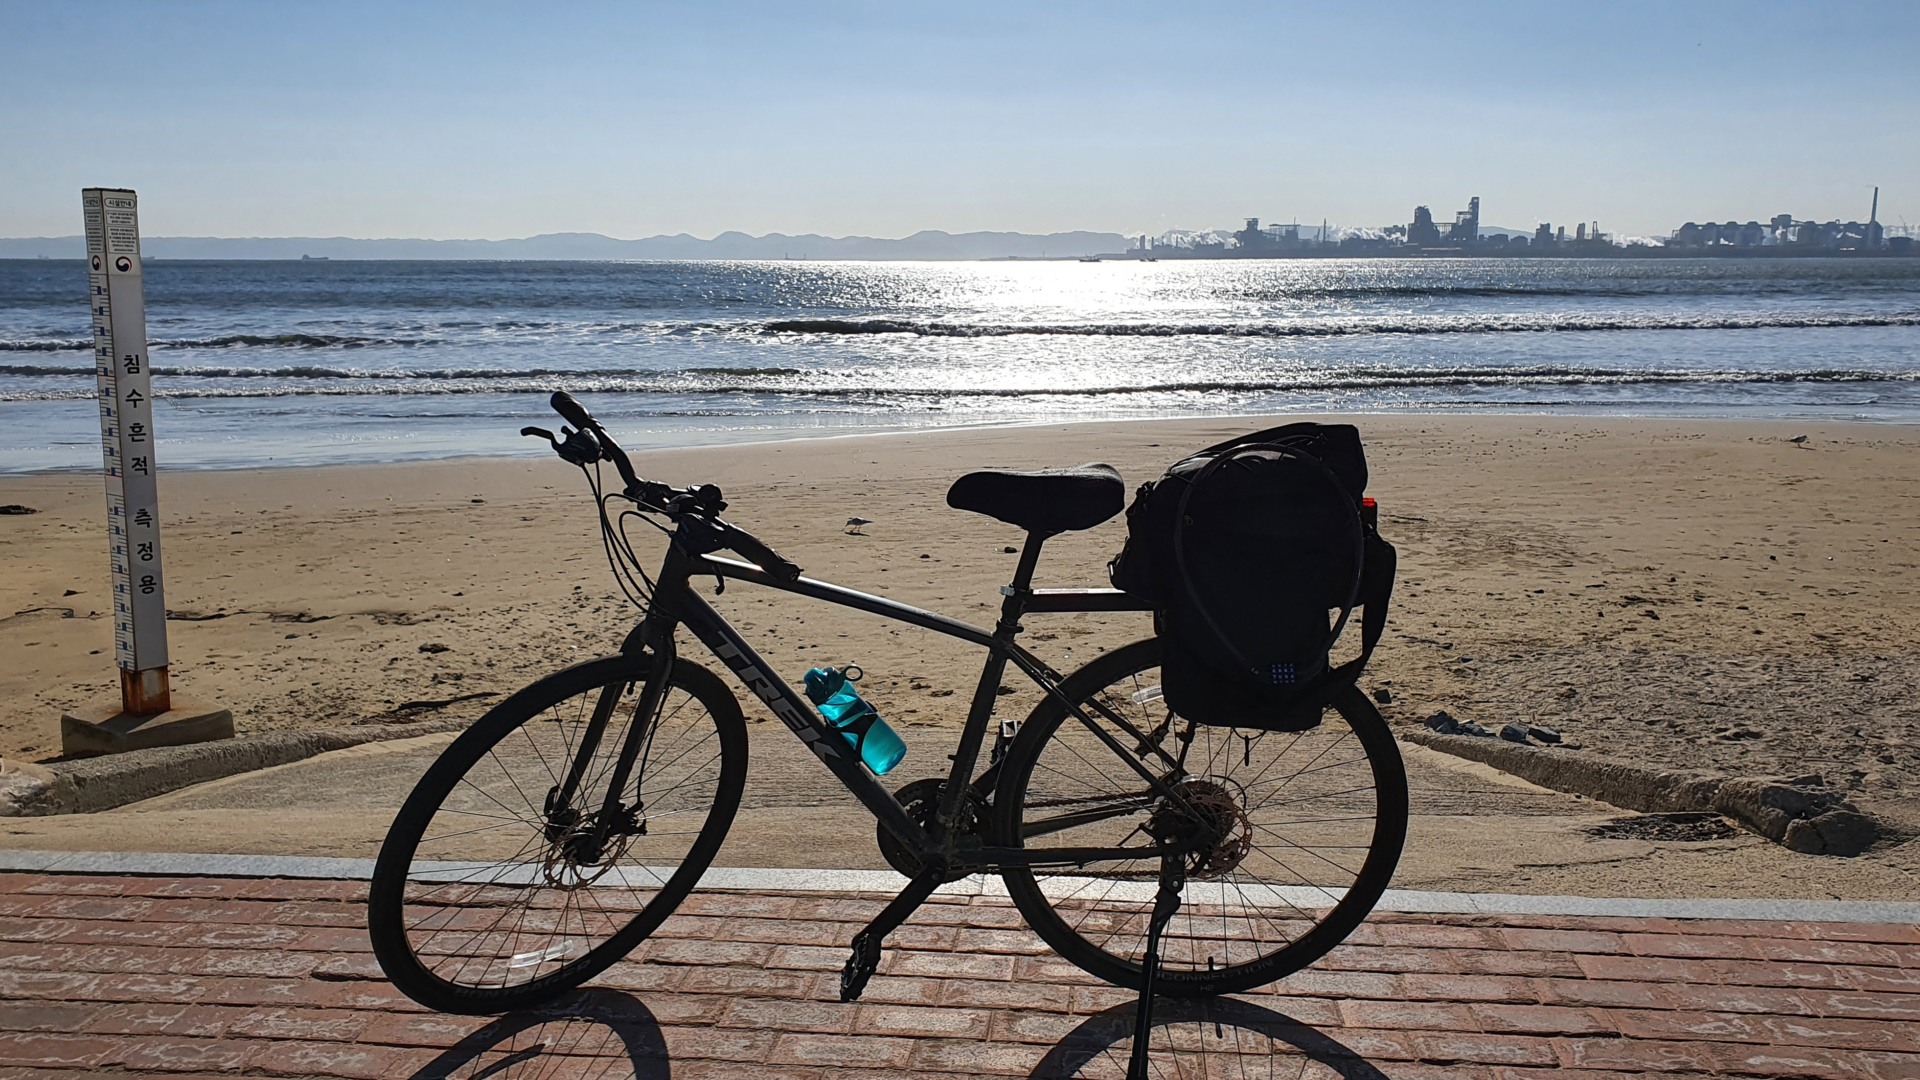 Bicycle with saddle bag on beach